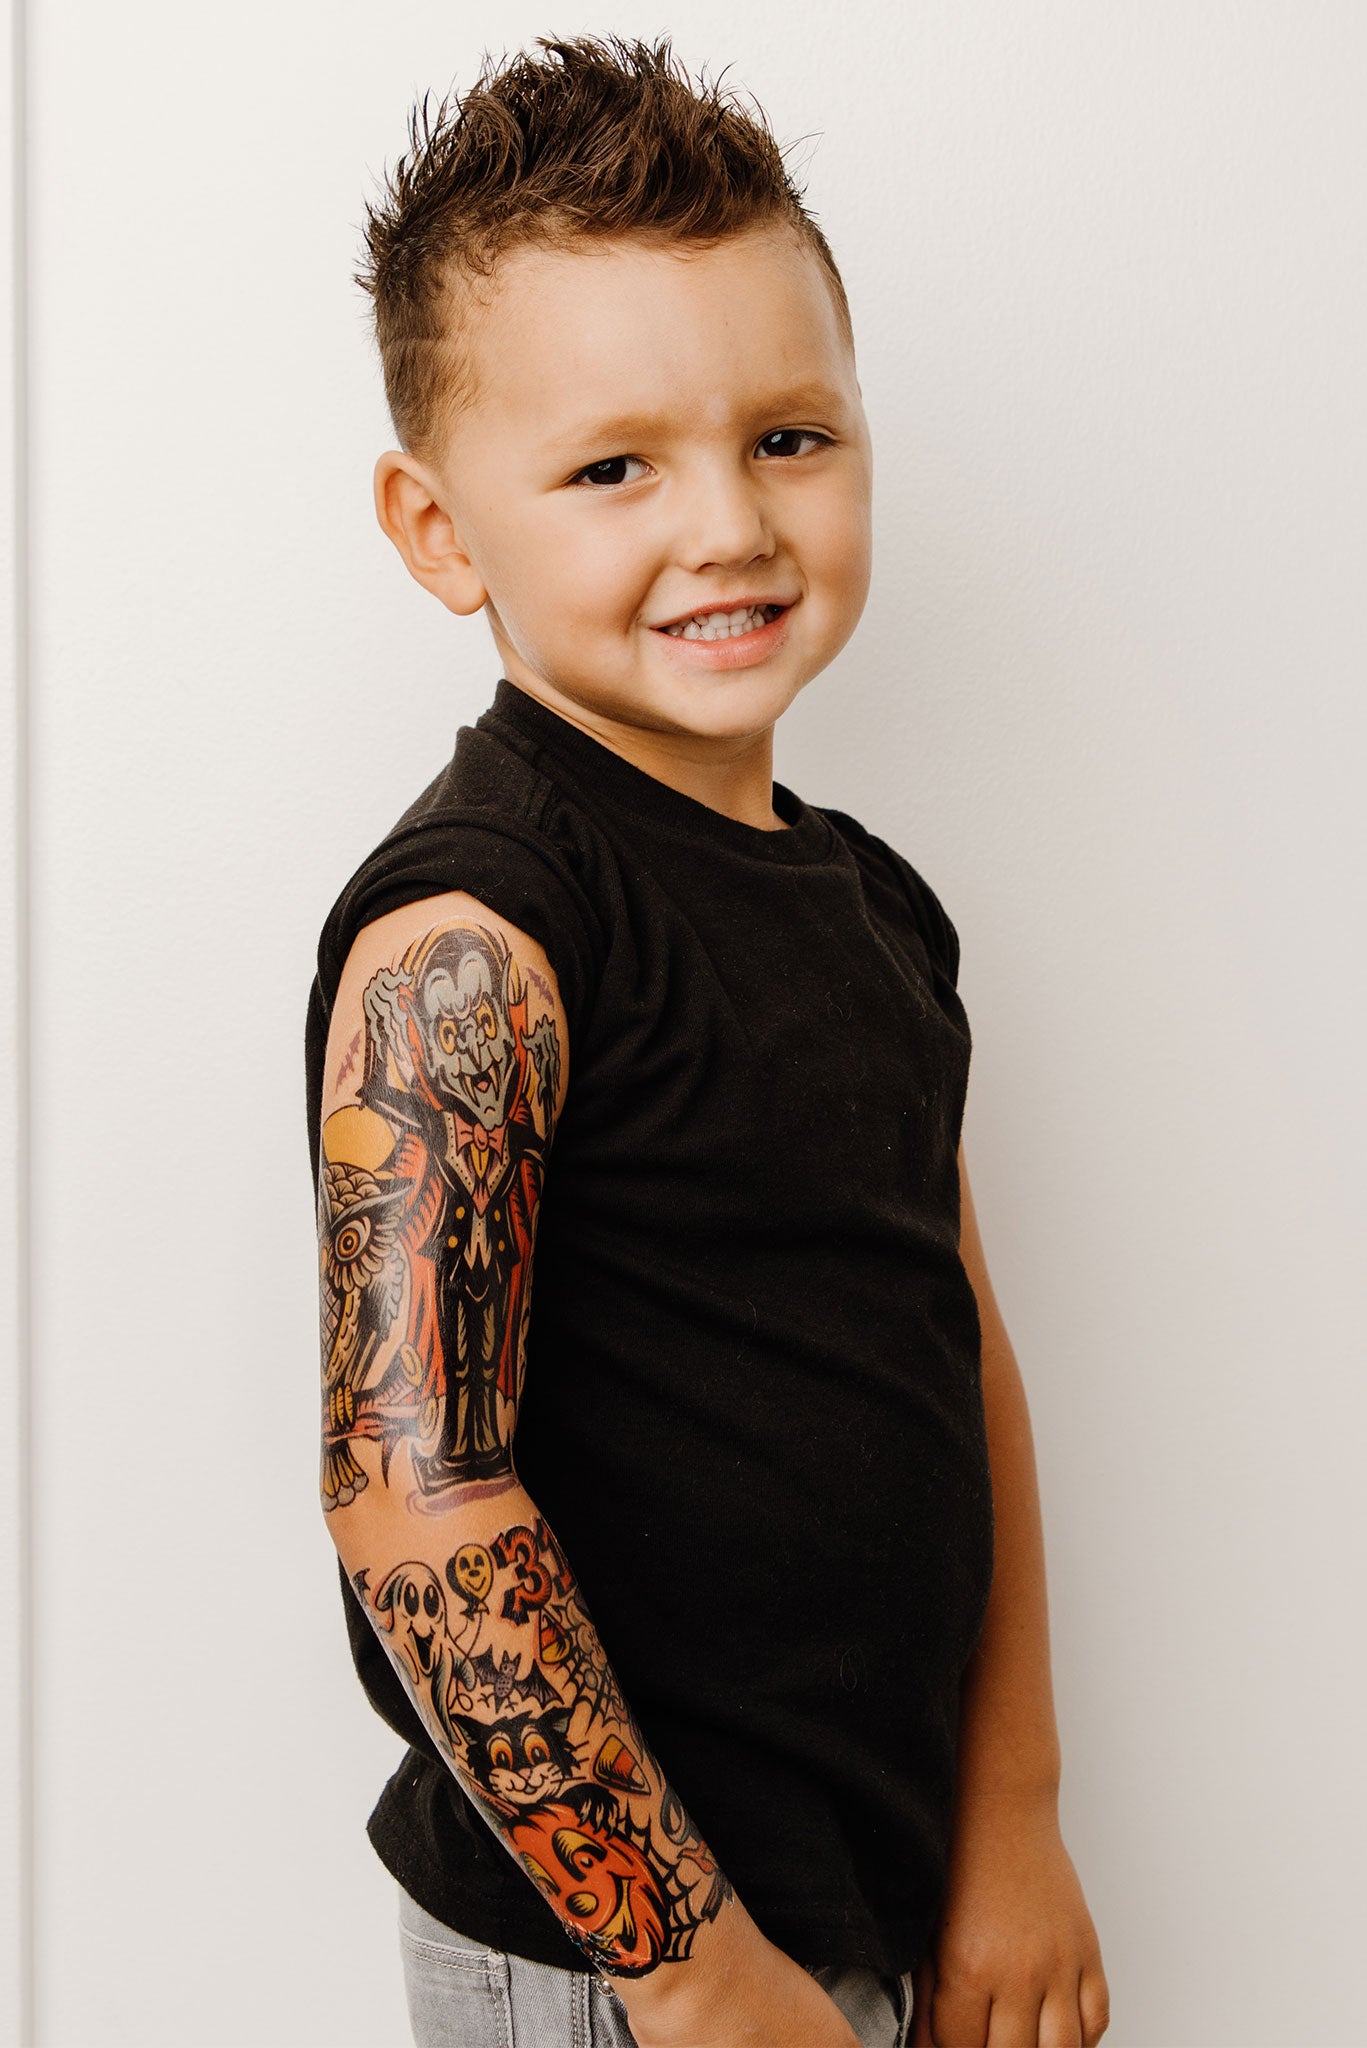 50 Best Custom Temporary Tattoos - Designs & Meanings (2019)